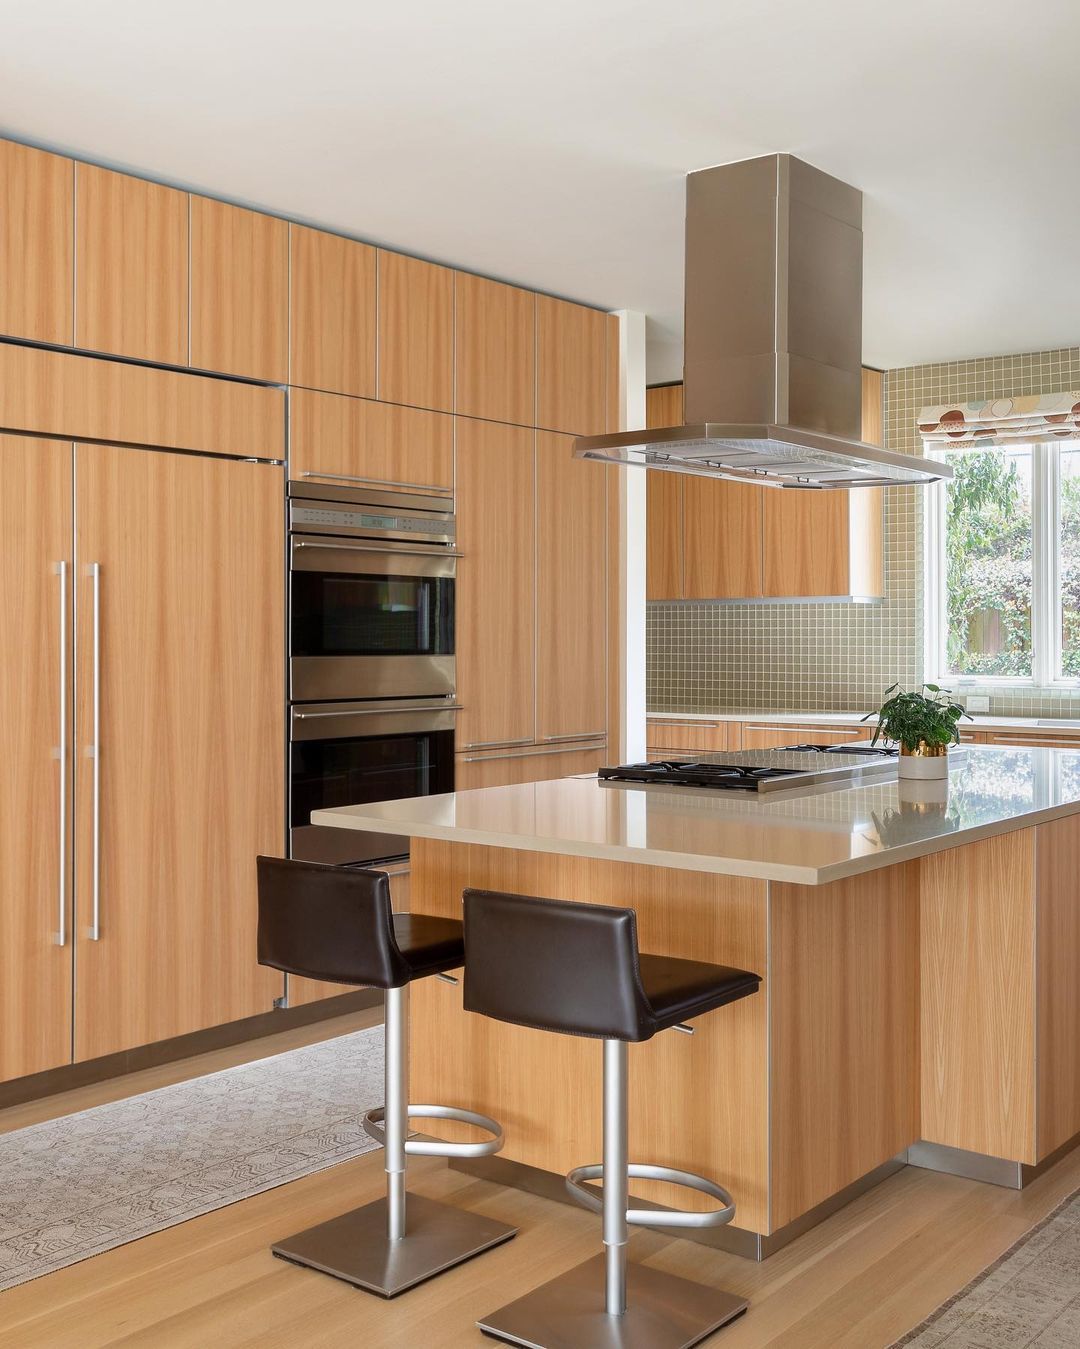 Modern Kitchen with Oak Floors. Photo by Instagram user @dorosflooring